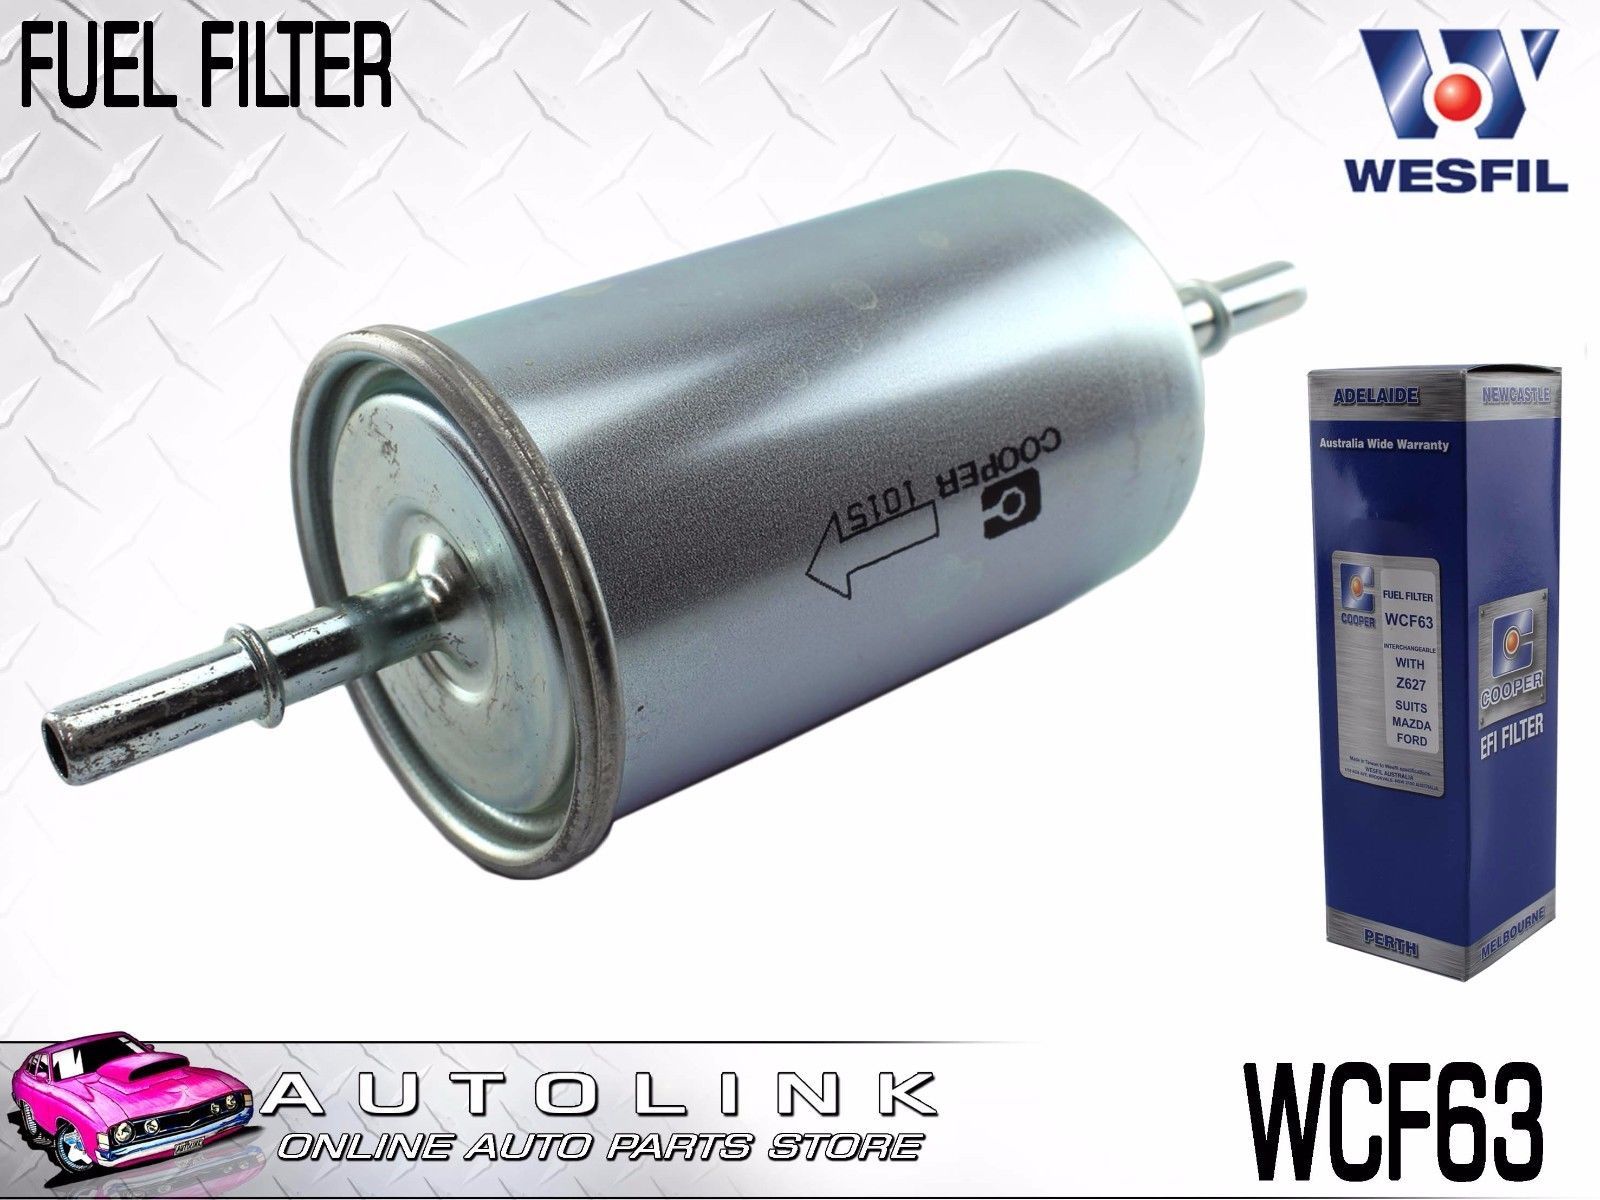 Fuel Filter for Mazda 3 2.0L 2.3L 2004-2009 WCF229